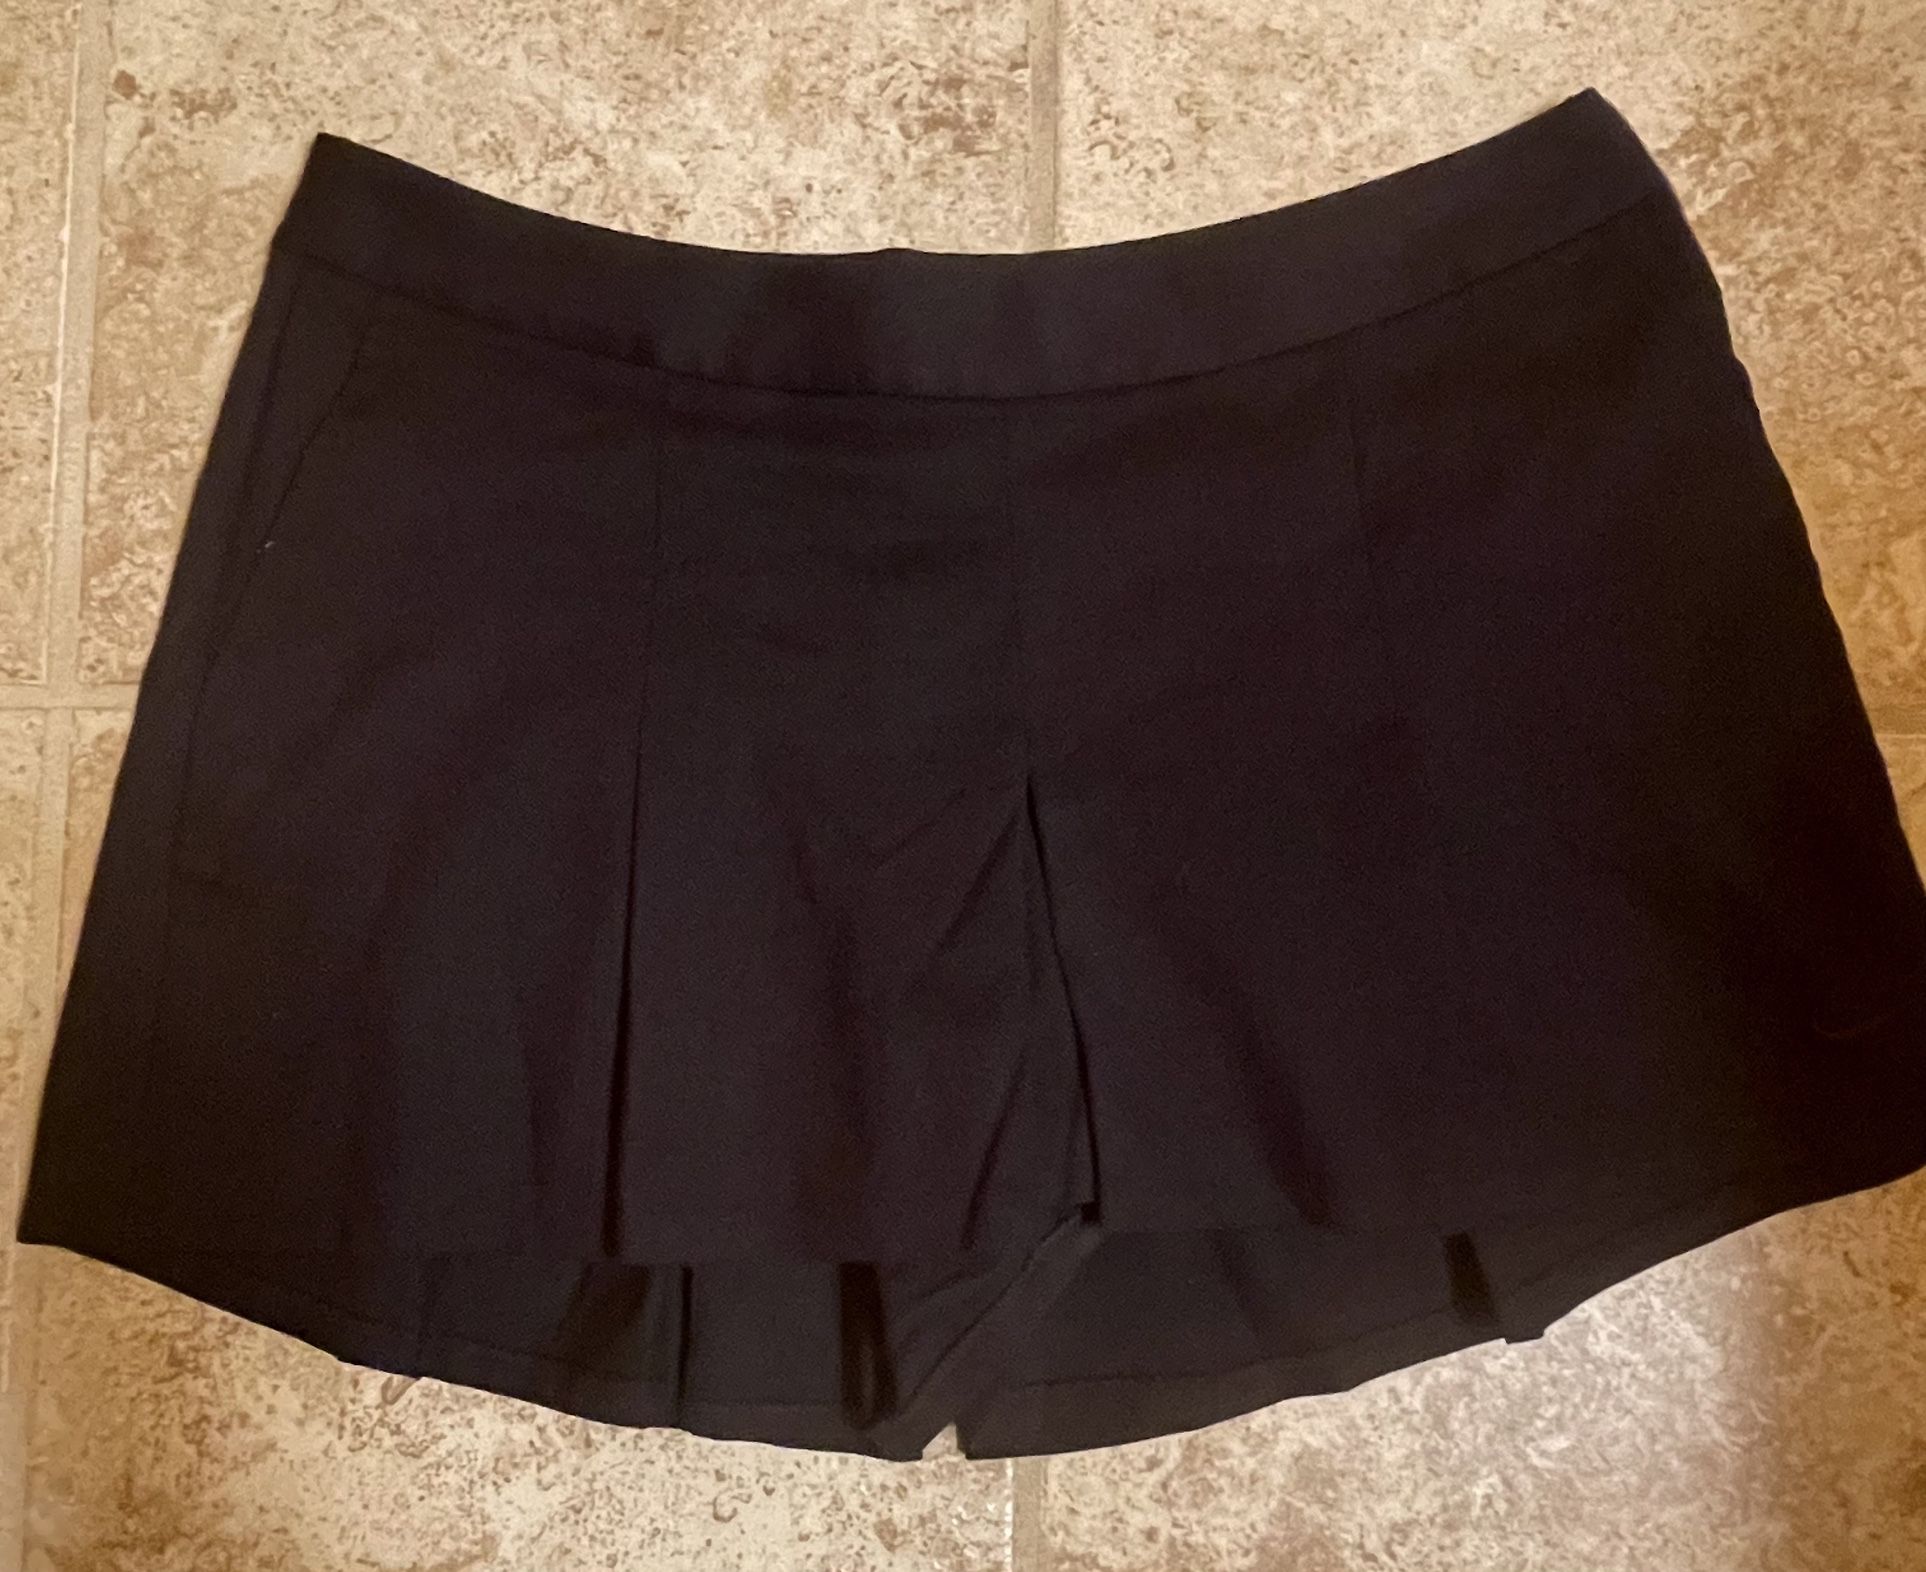 Nike Golf Skirt Skort Dri Fit Performance Black Athletic Women's Size 8